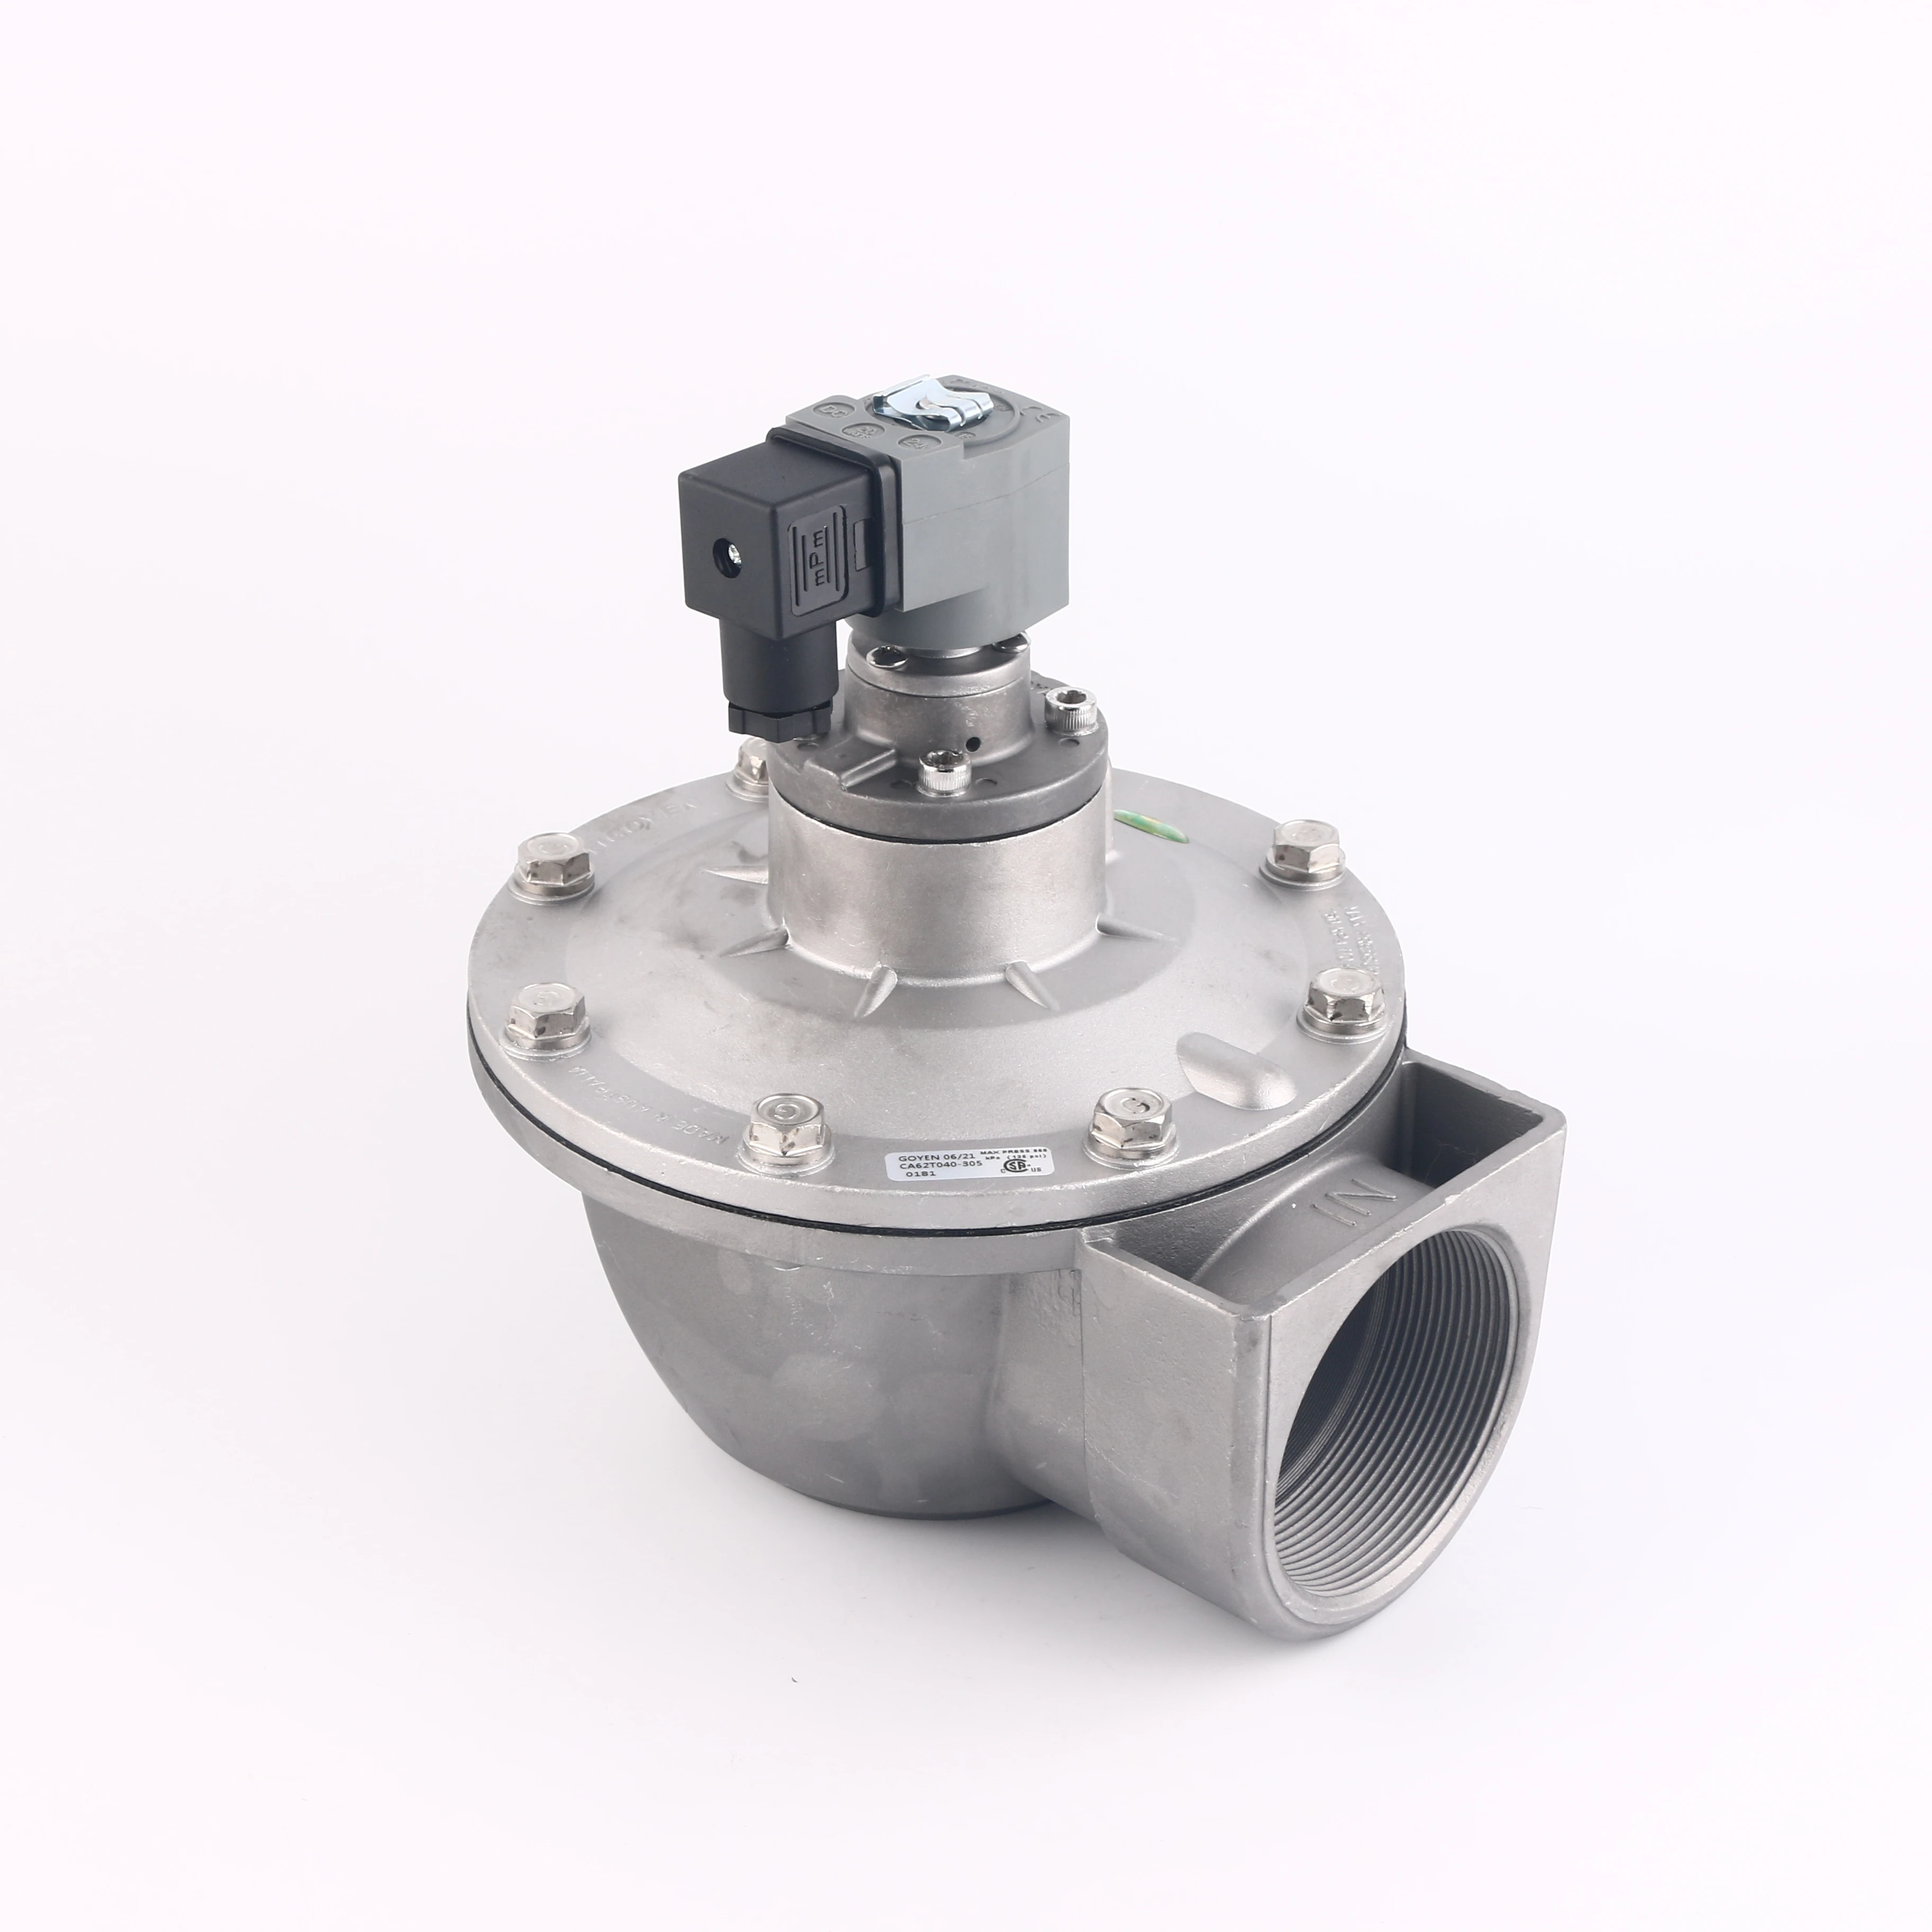 

GOYEN CA RCA62T pulse jet valve environmental bag filter solenoid valve diaphragm kit,